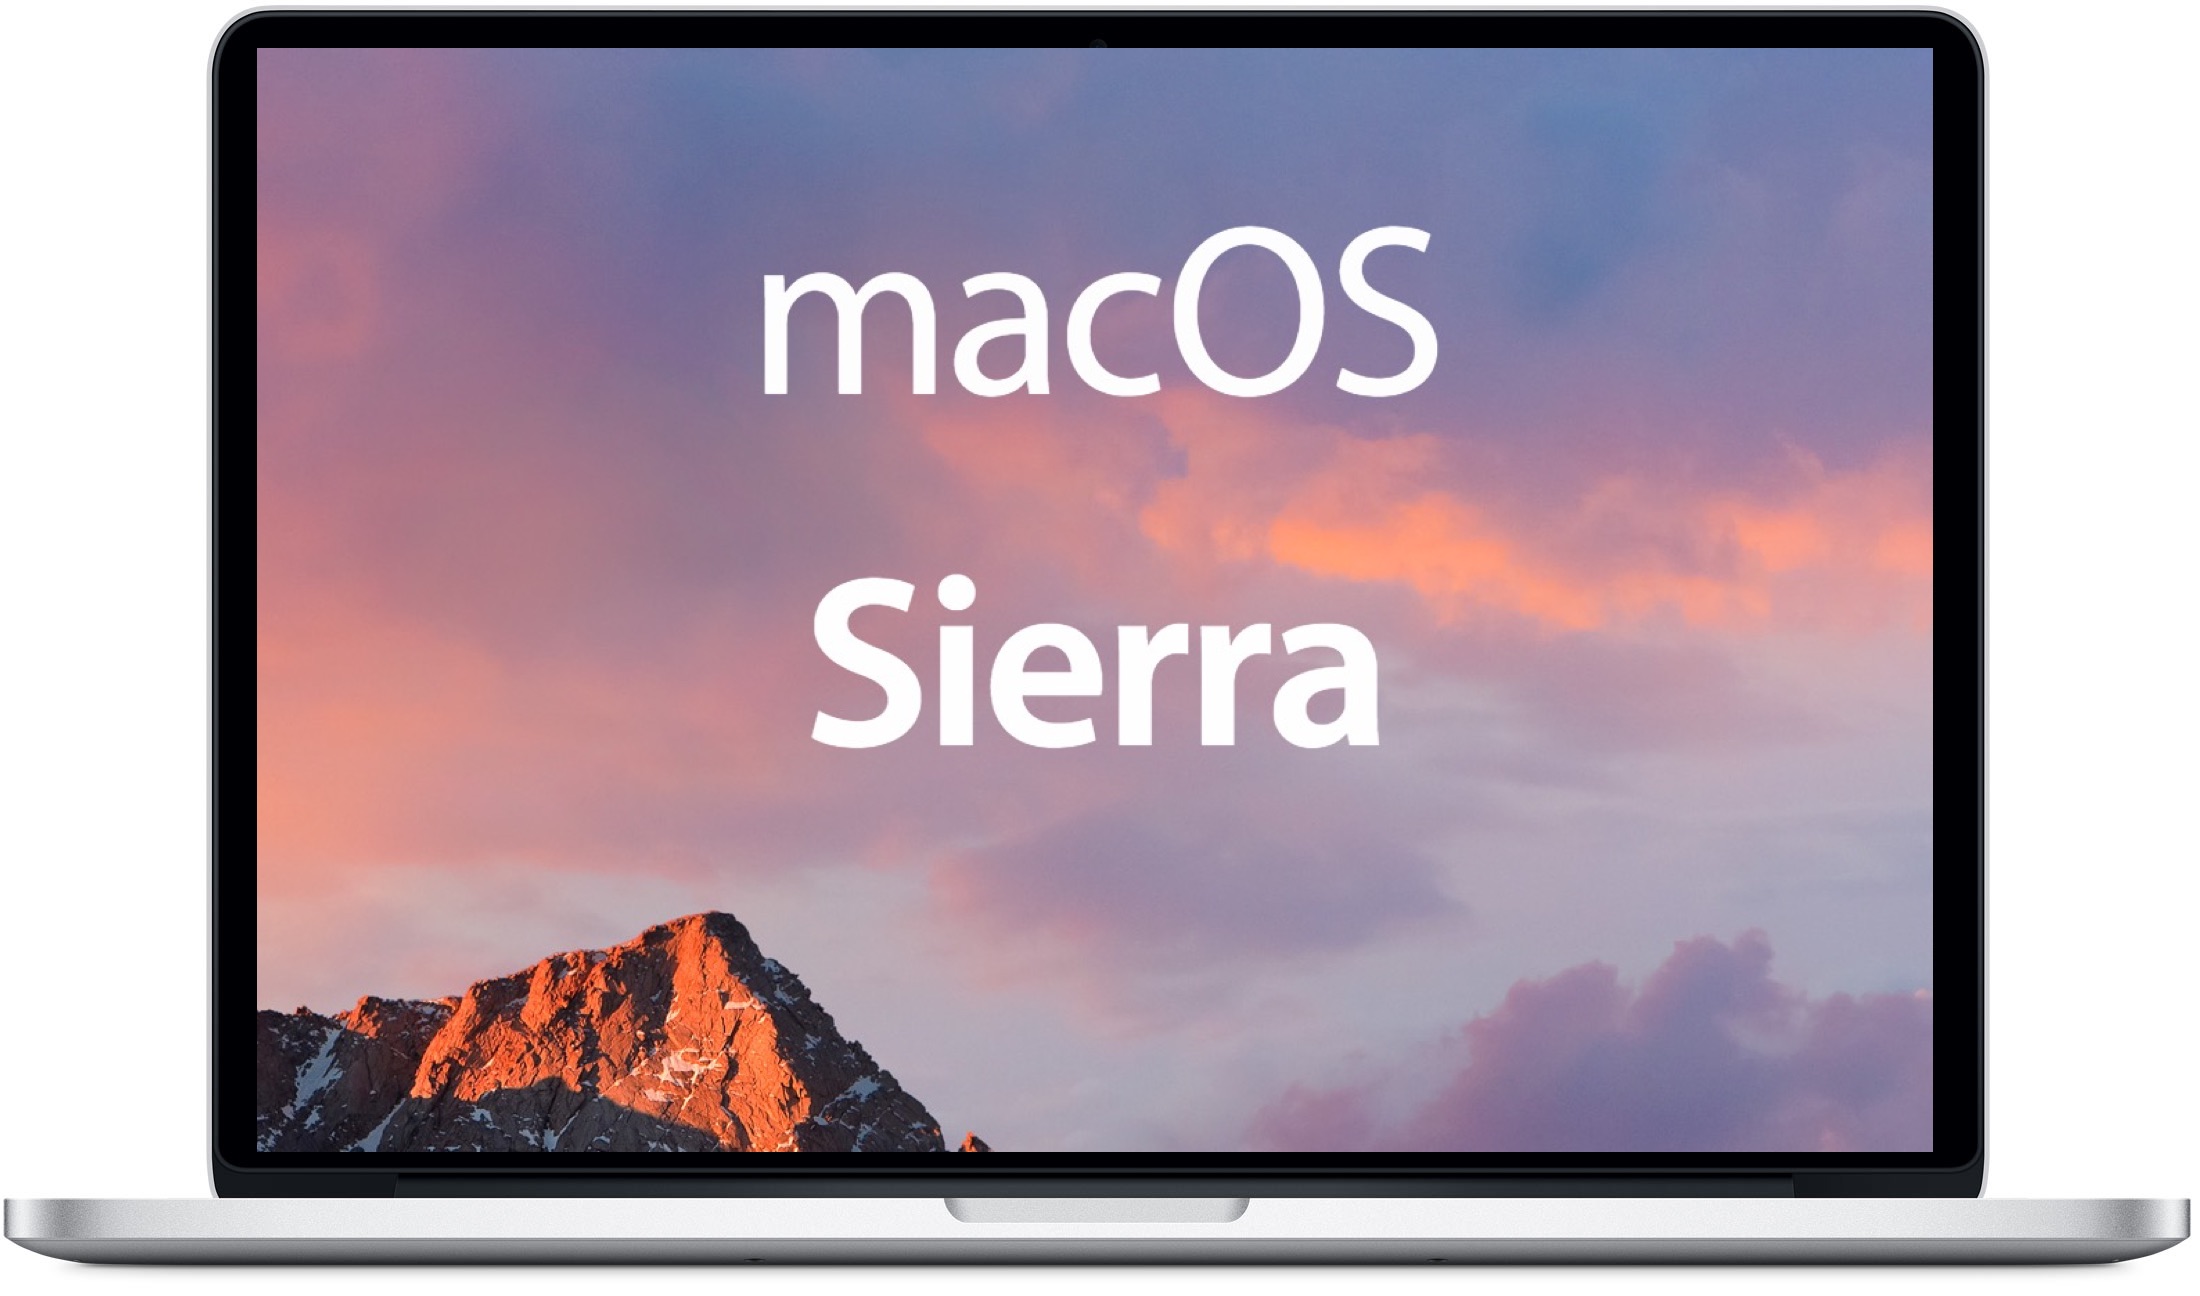 Mac os x sierra update download windows 7